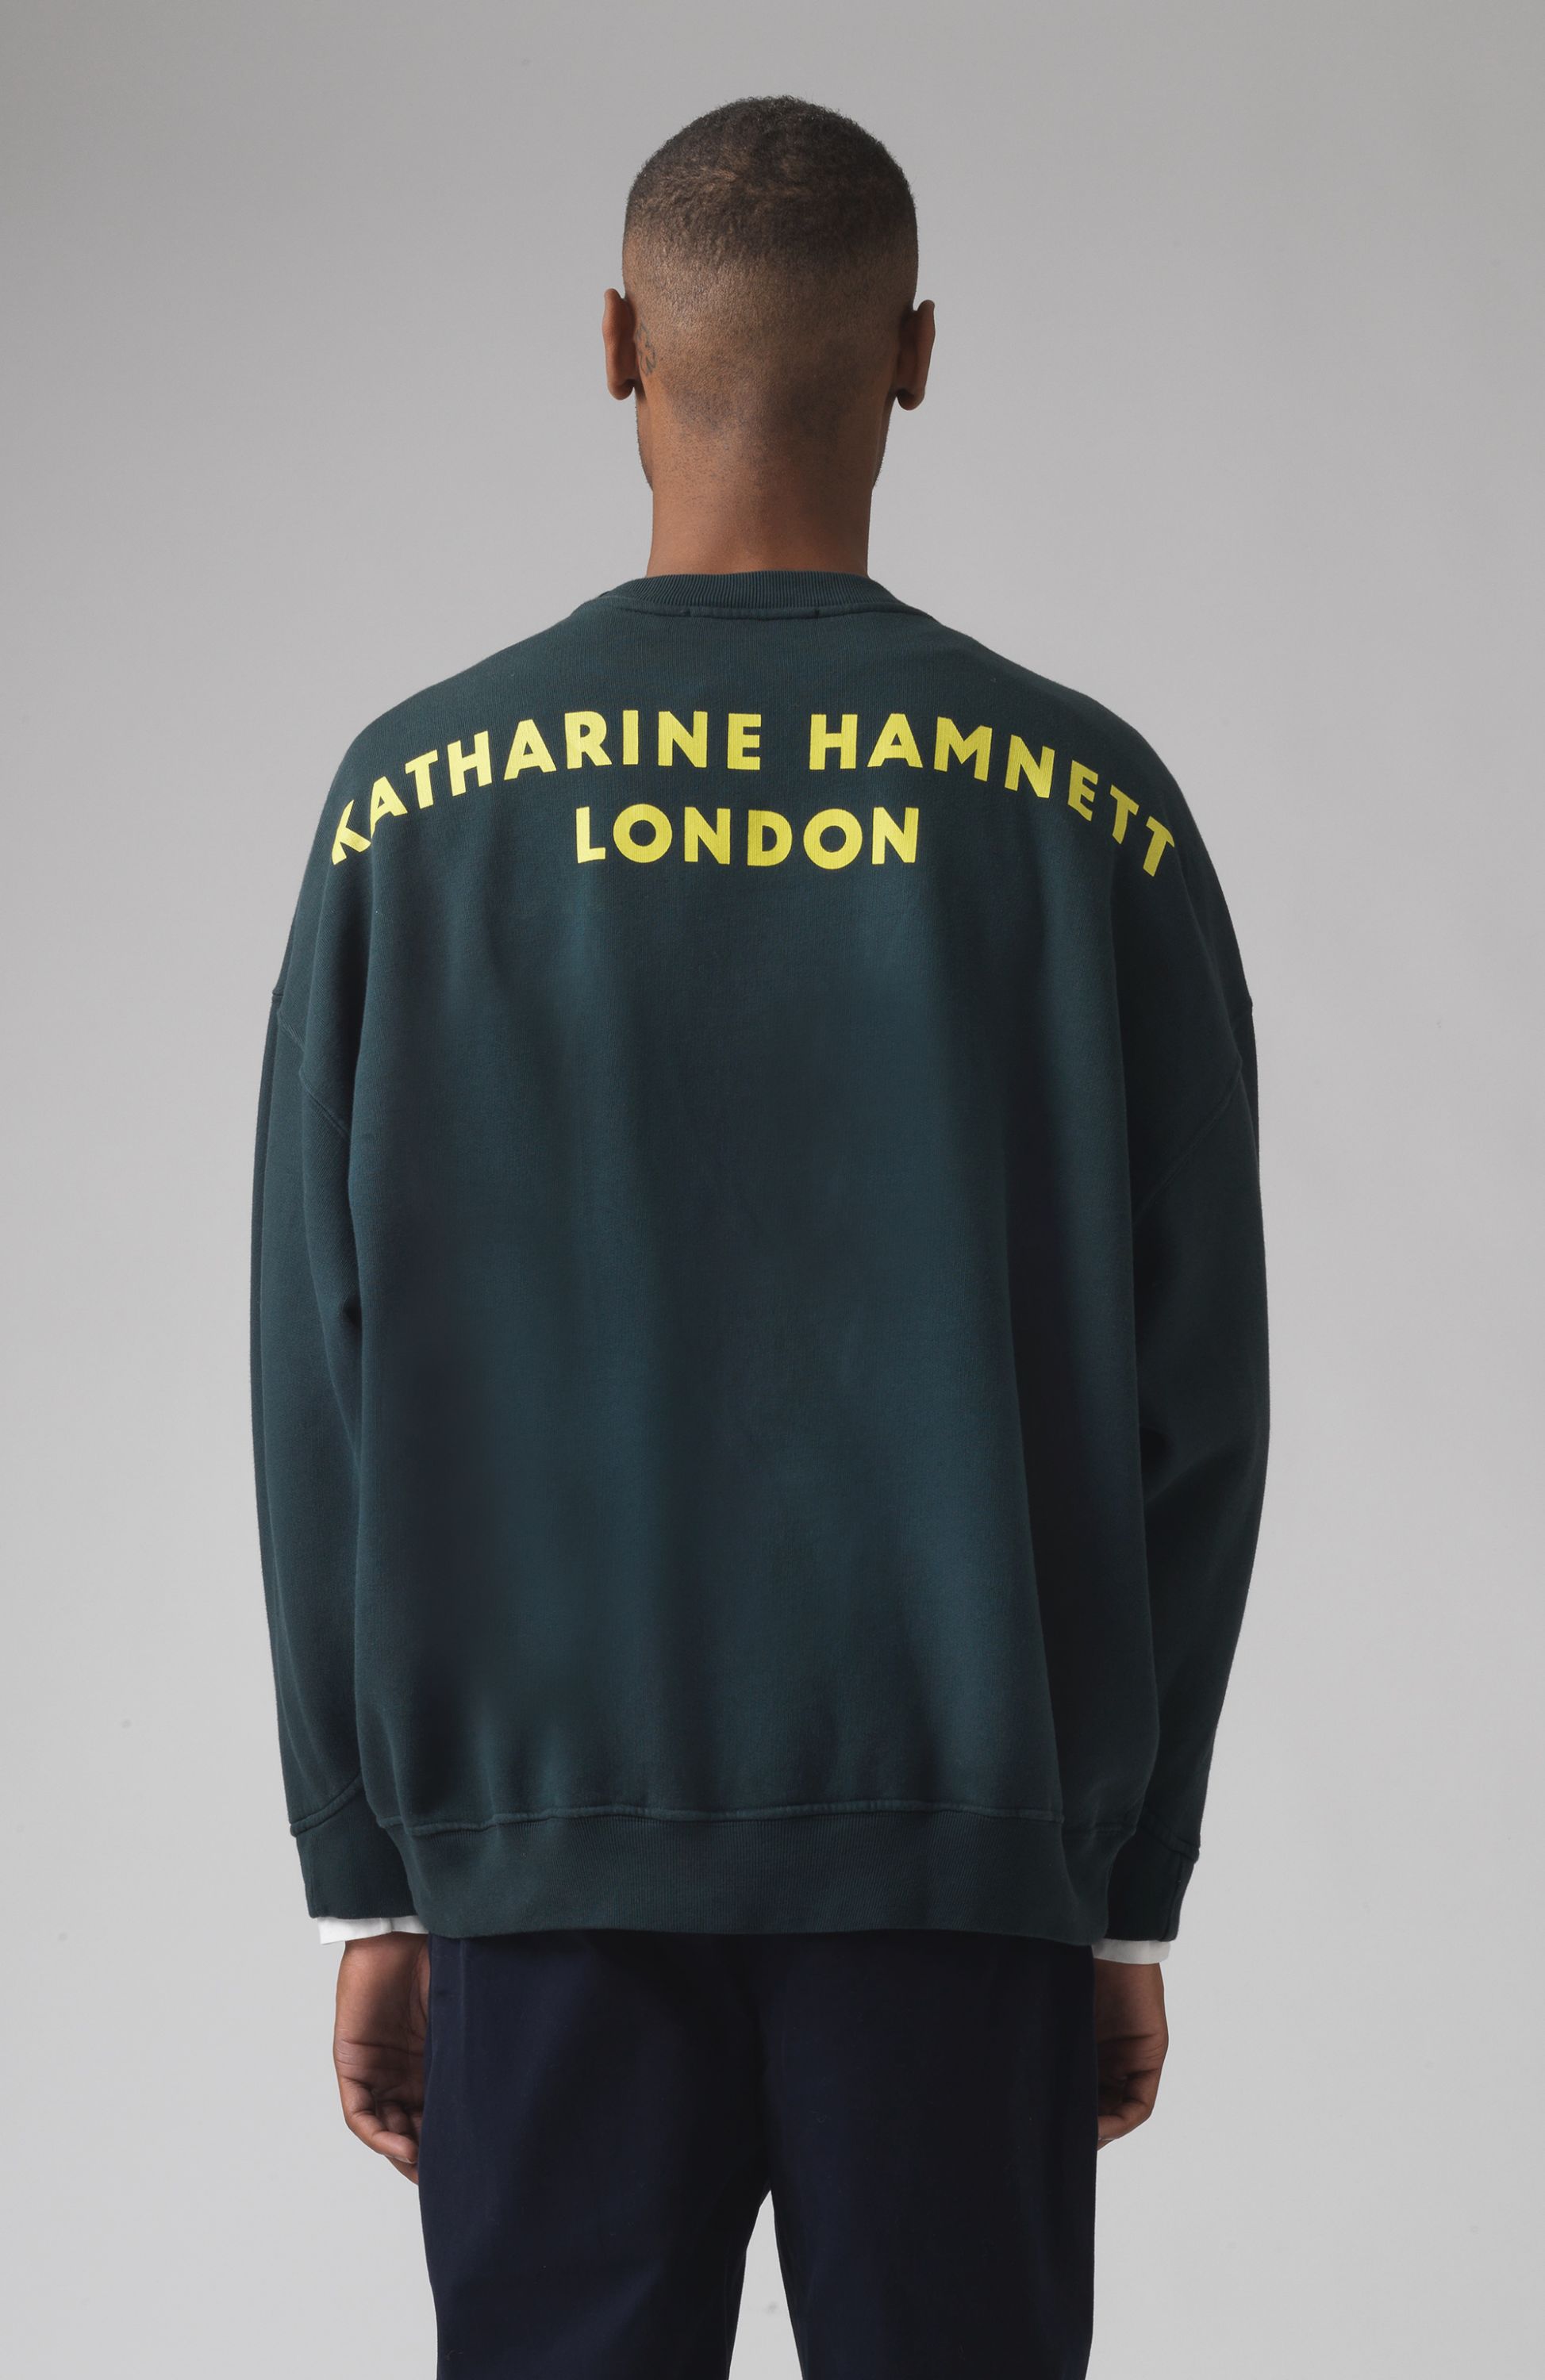 Katharine Hamnett London - Joey logo green organic cotton sweatshirt